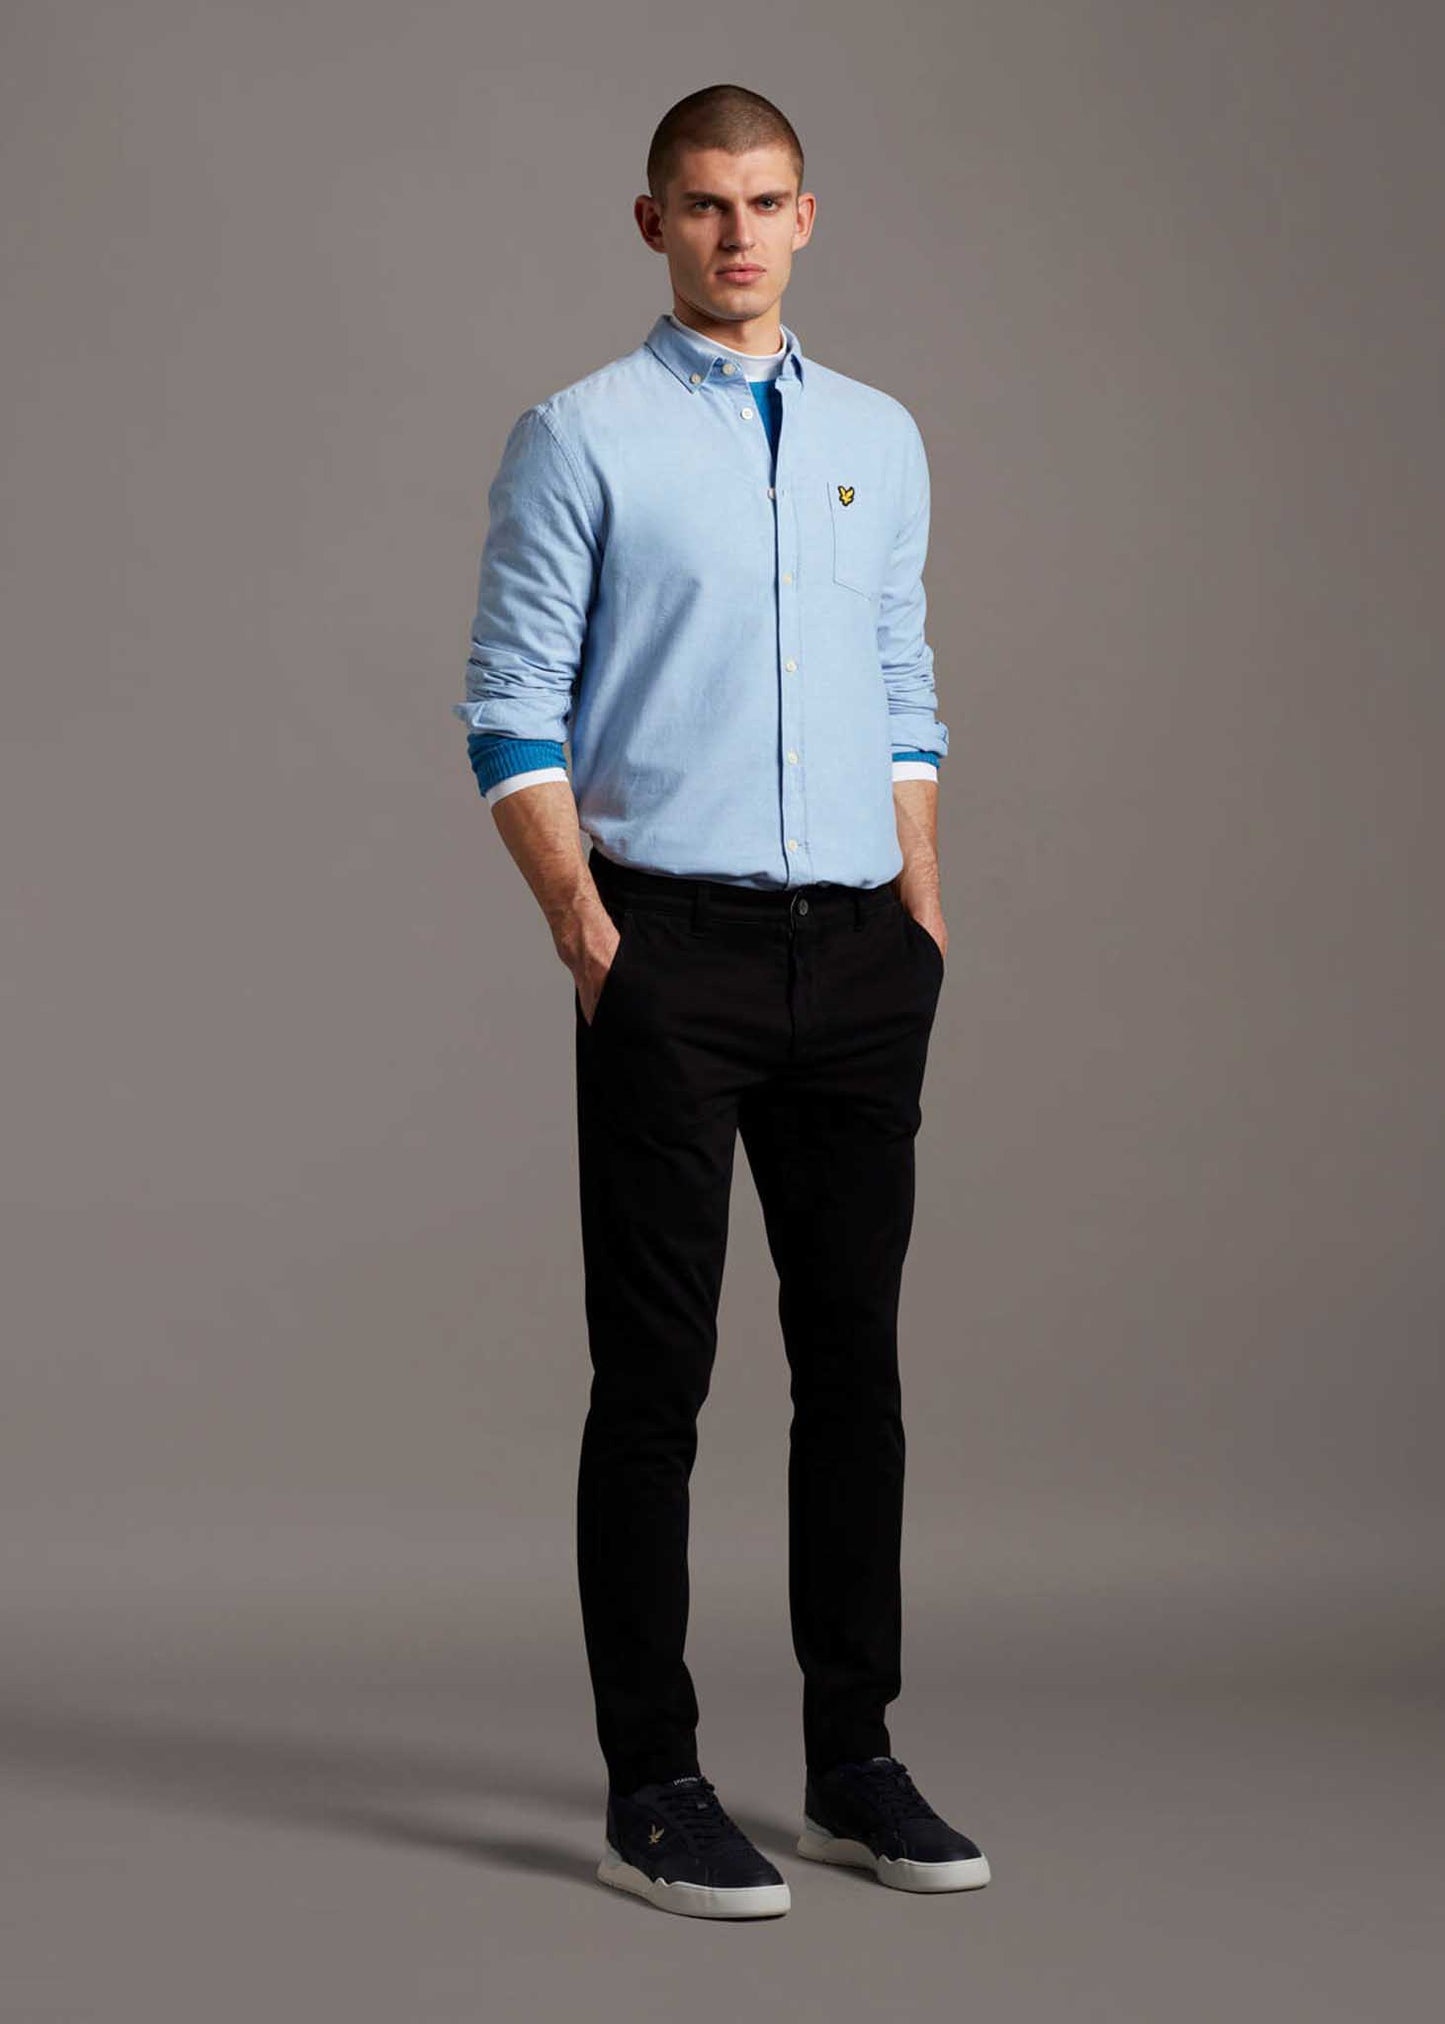 Oxford shirt - riviera blue